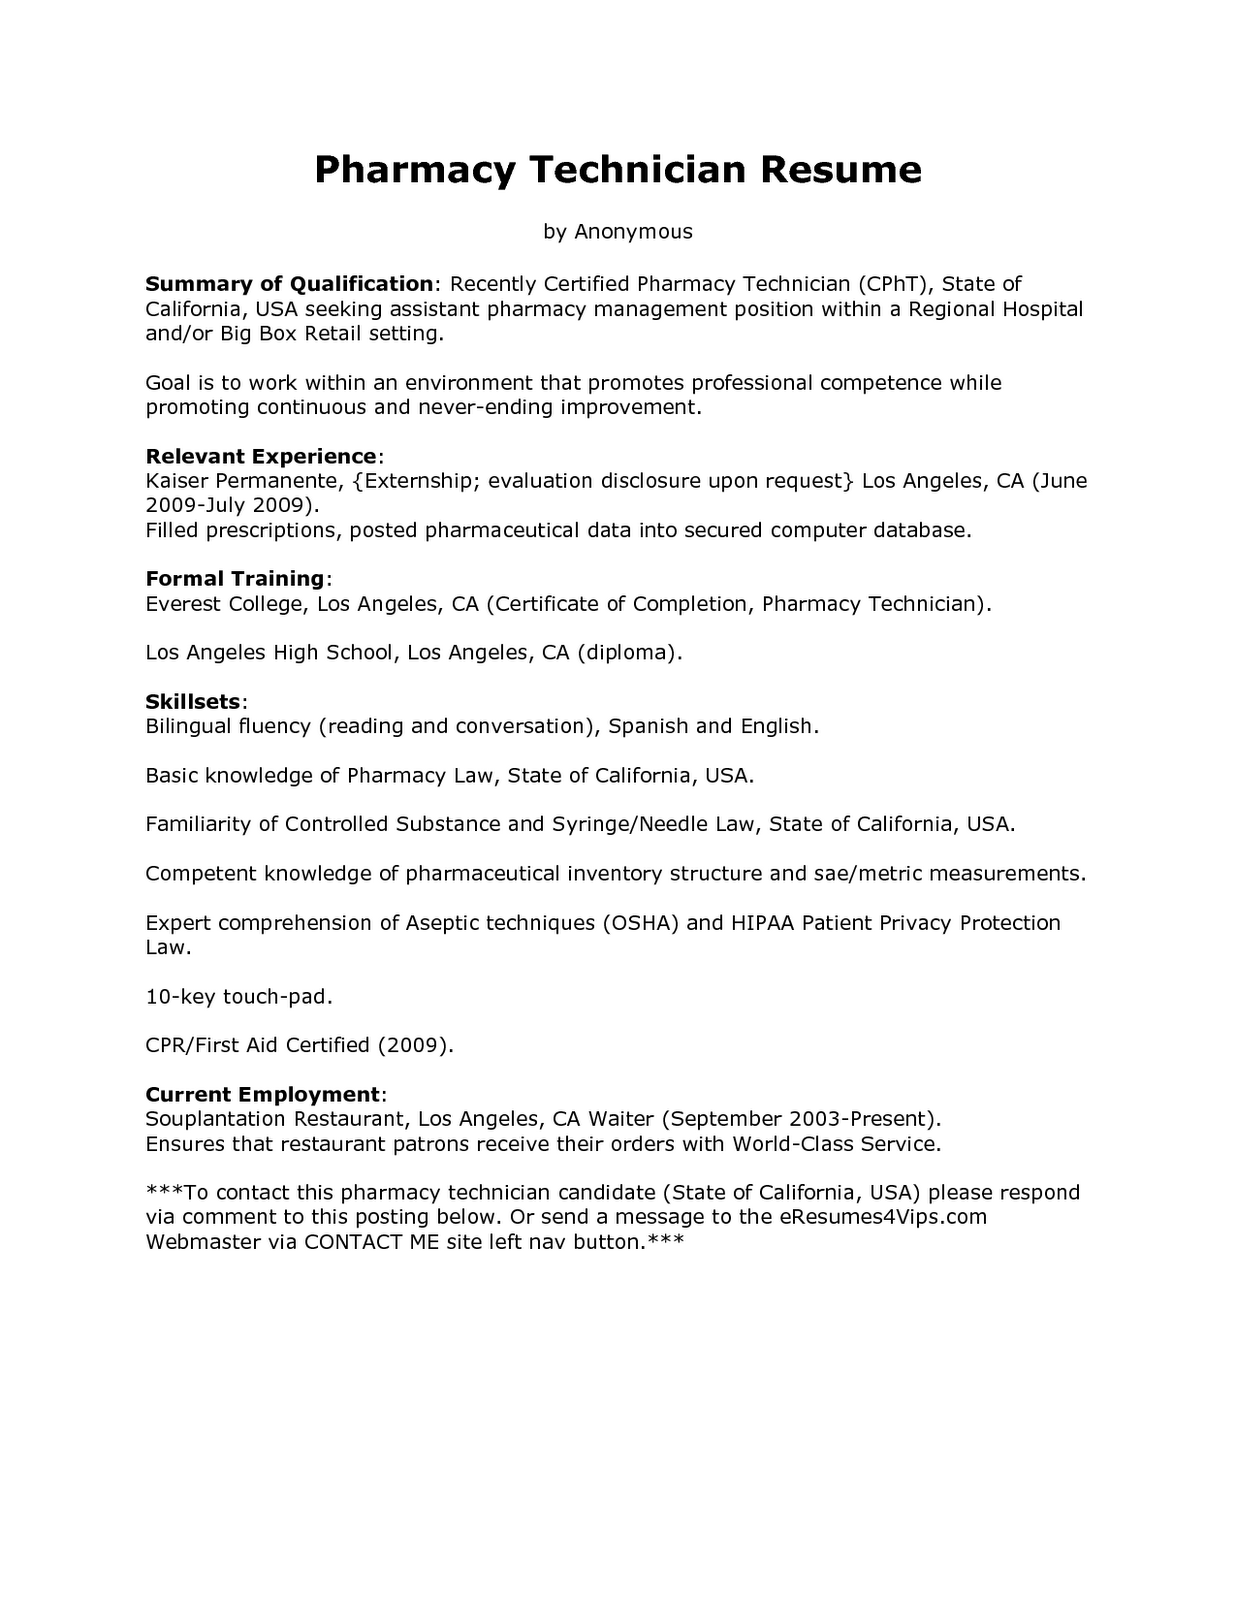 Example of pharmacist resume